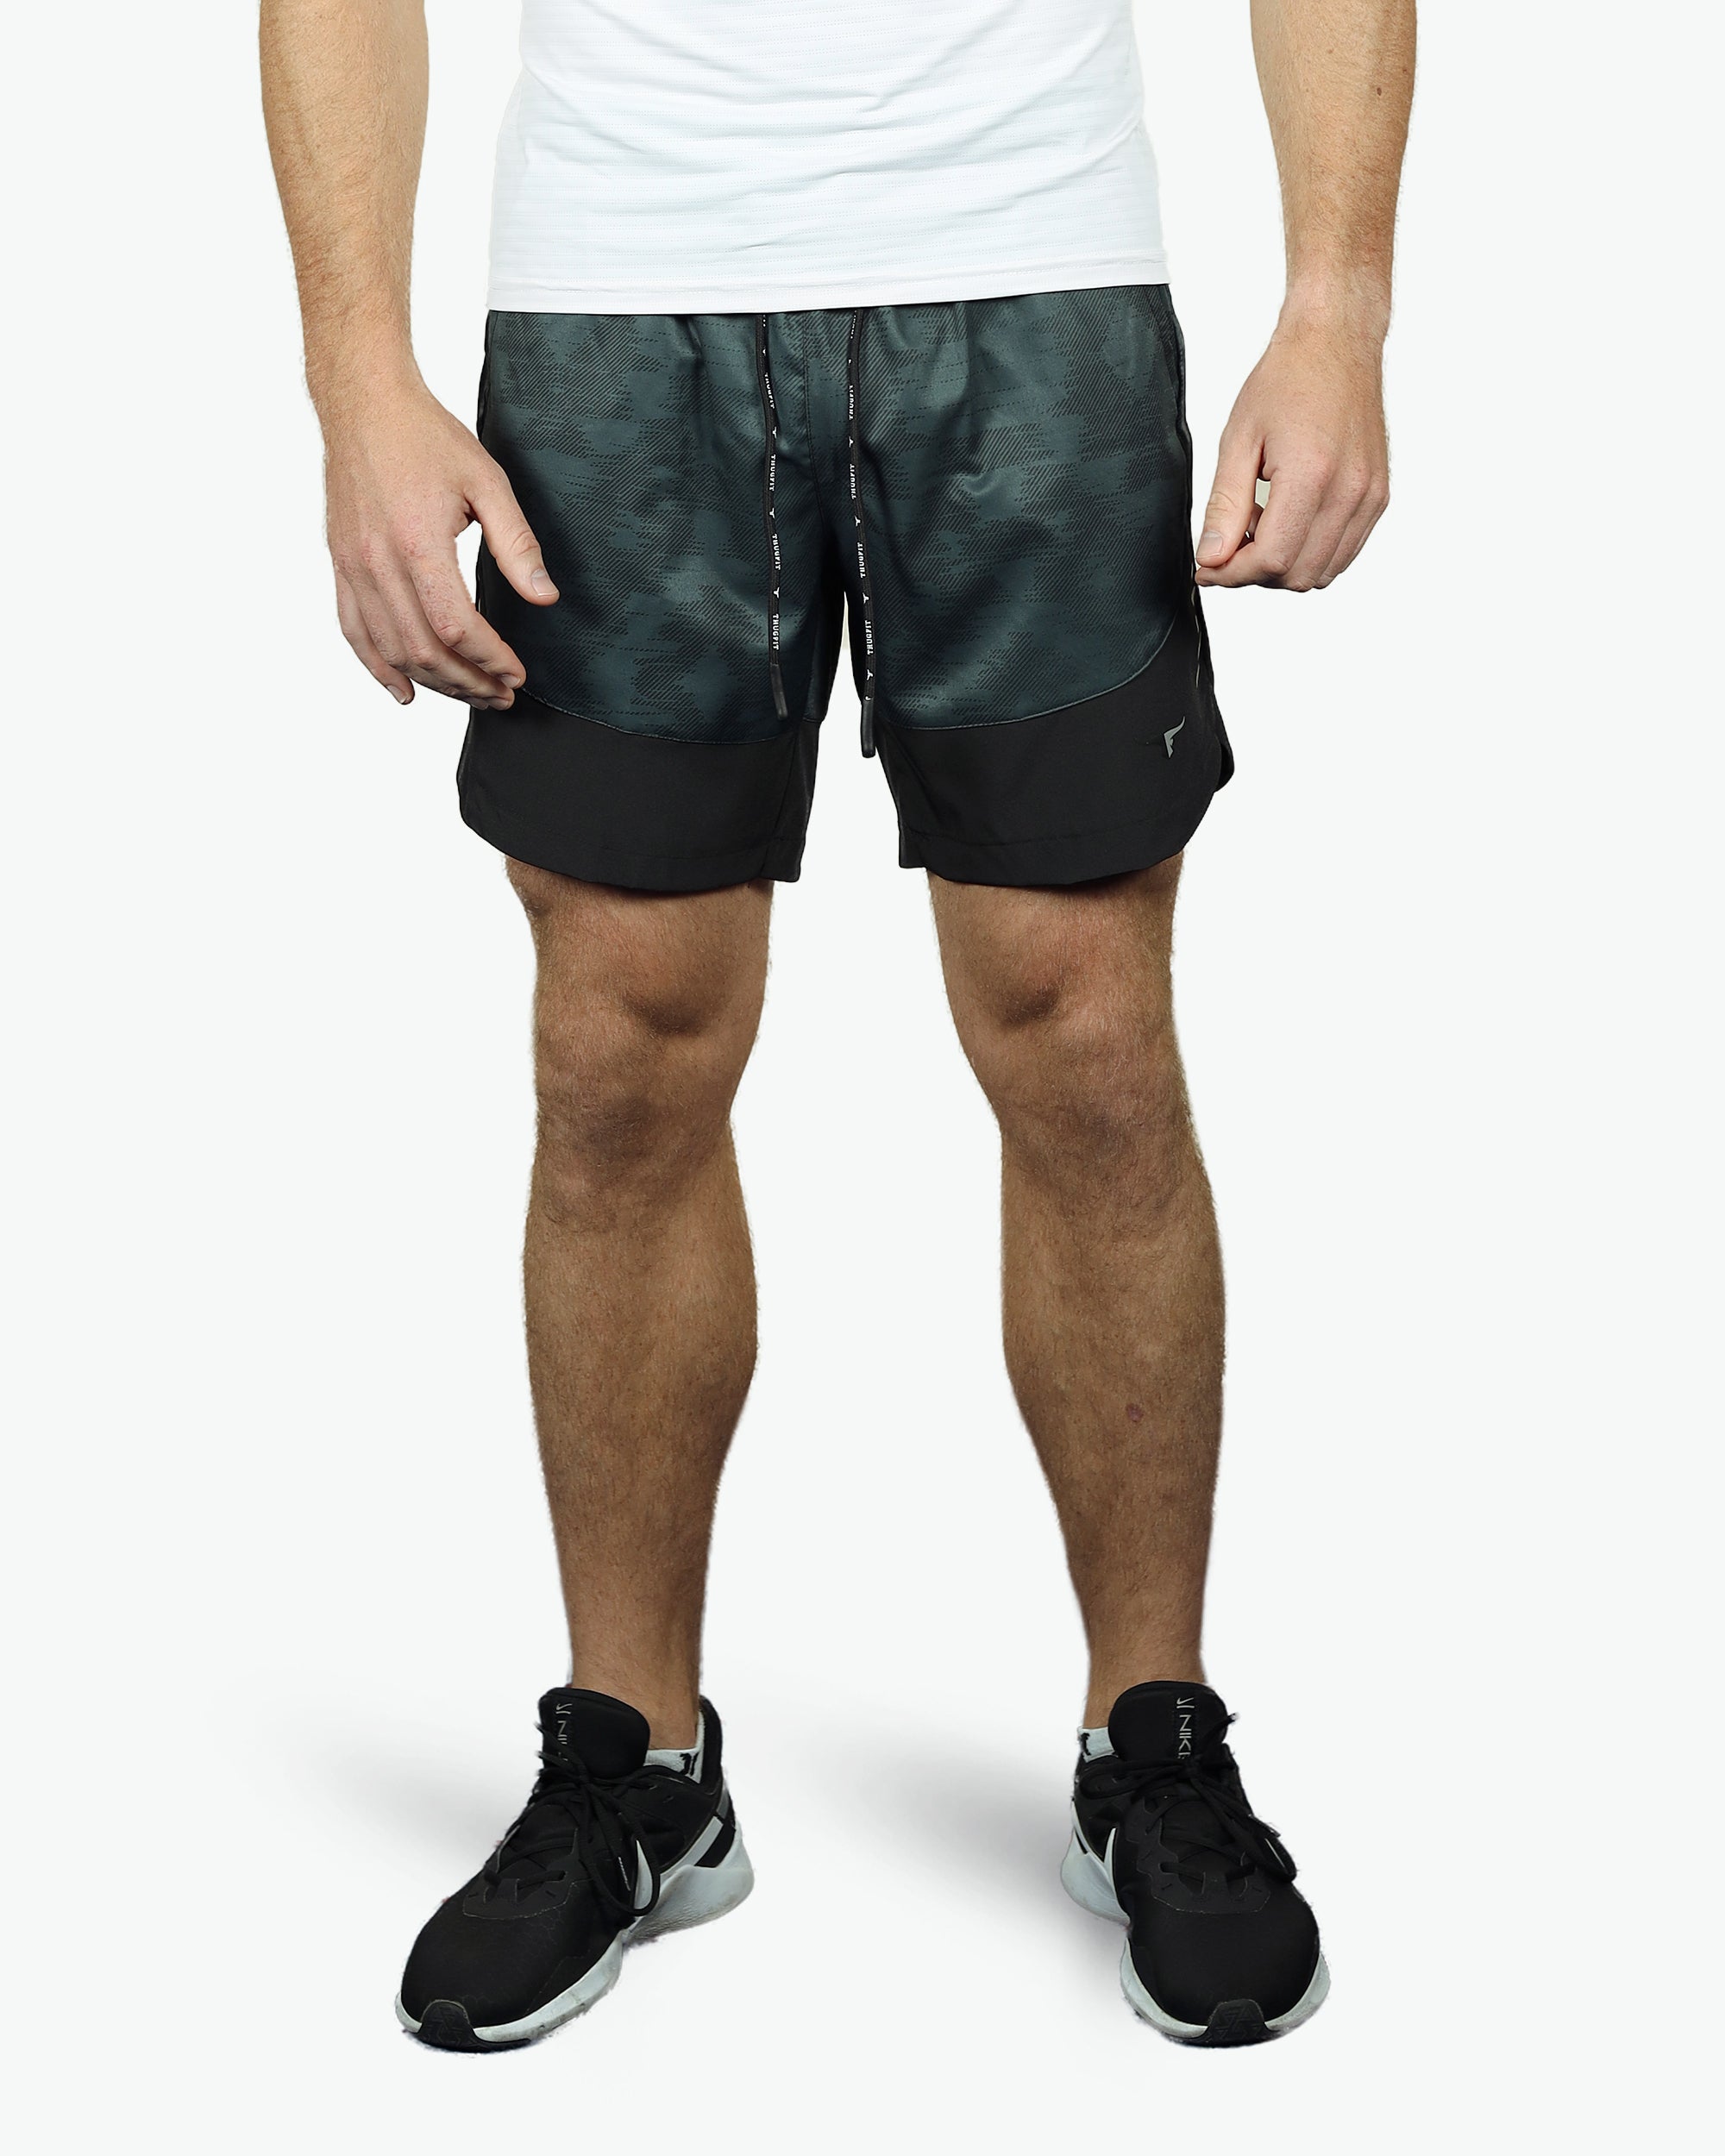 Fitflex  Shorts 7" Inseam - THUGFIT